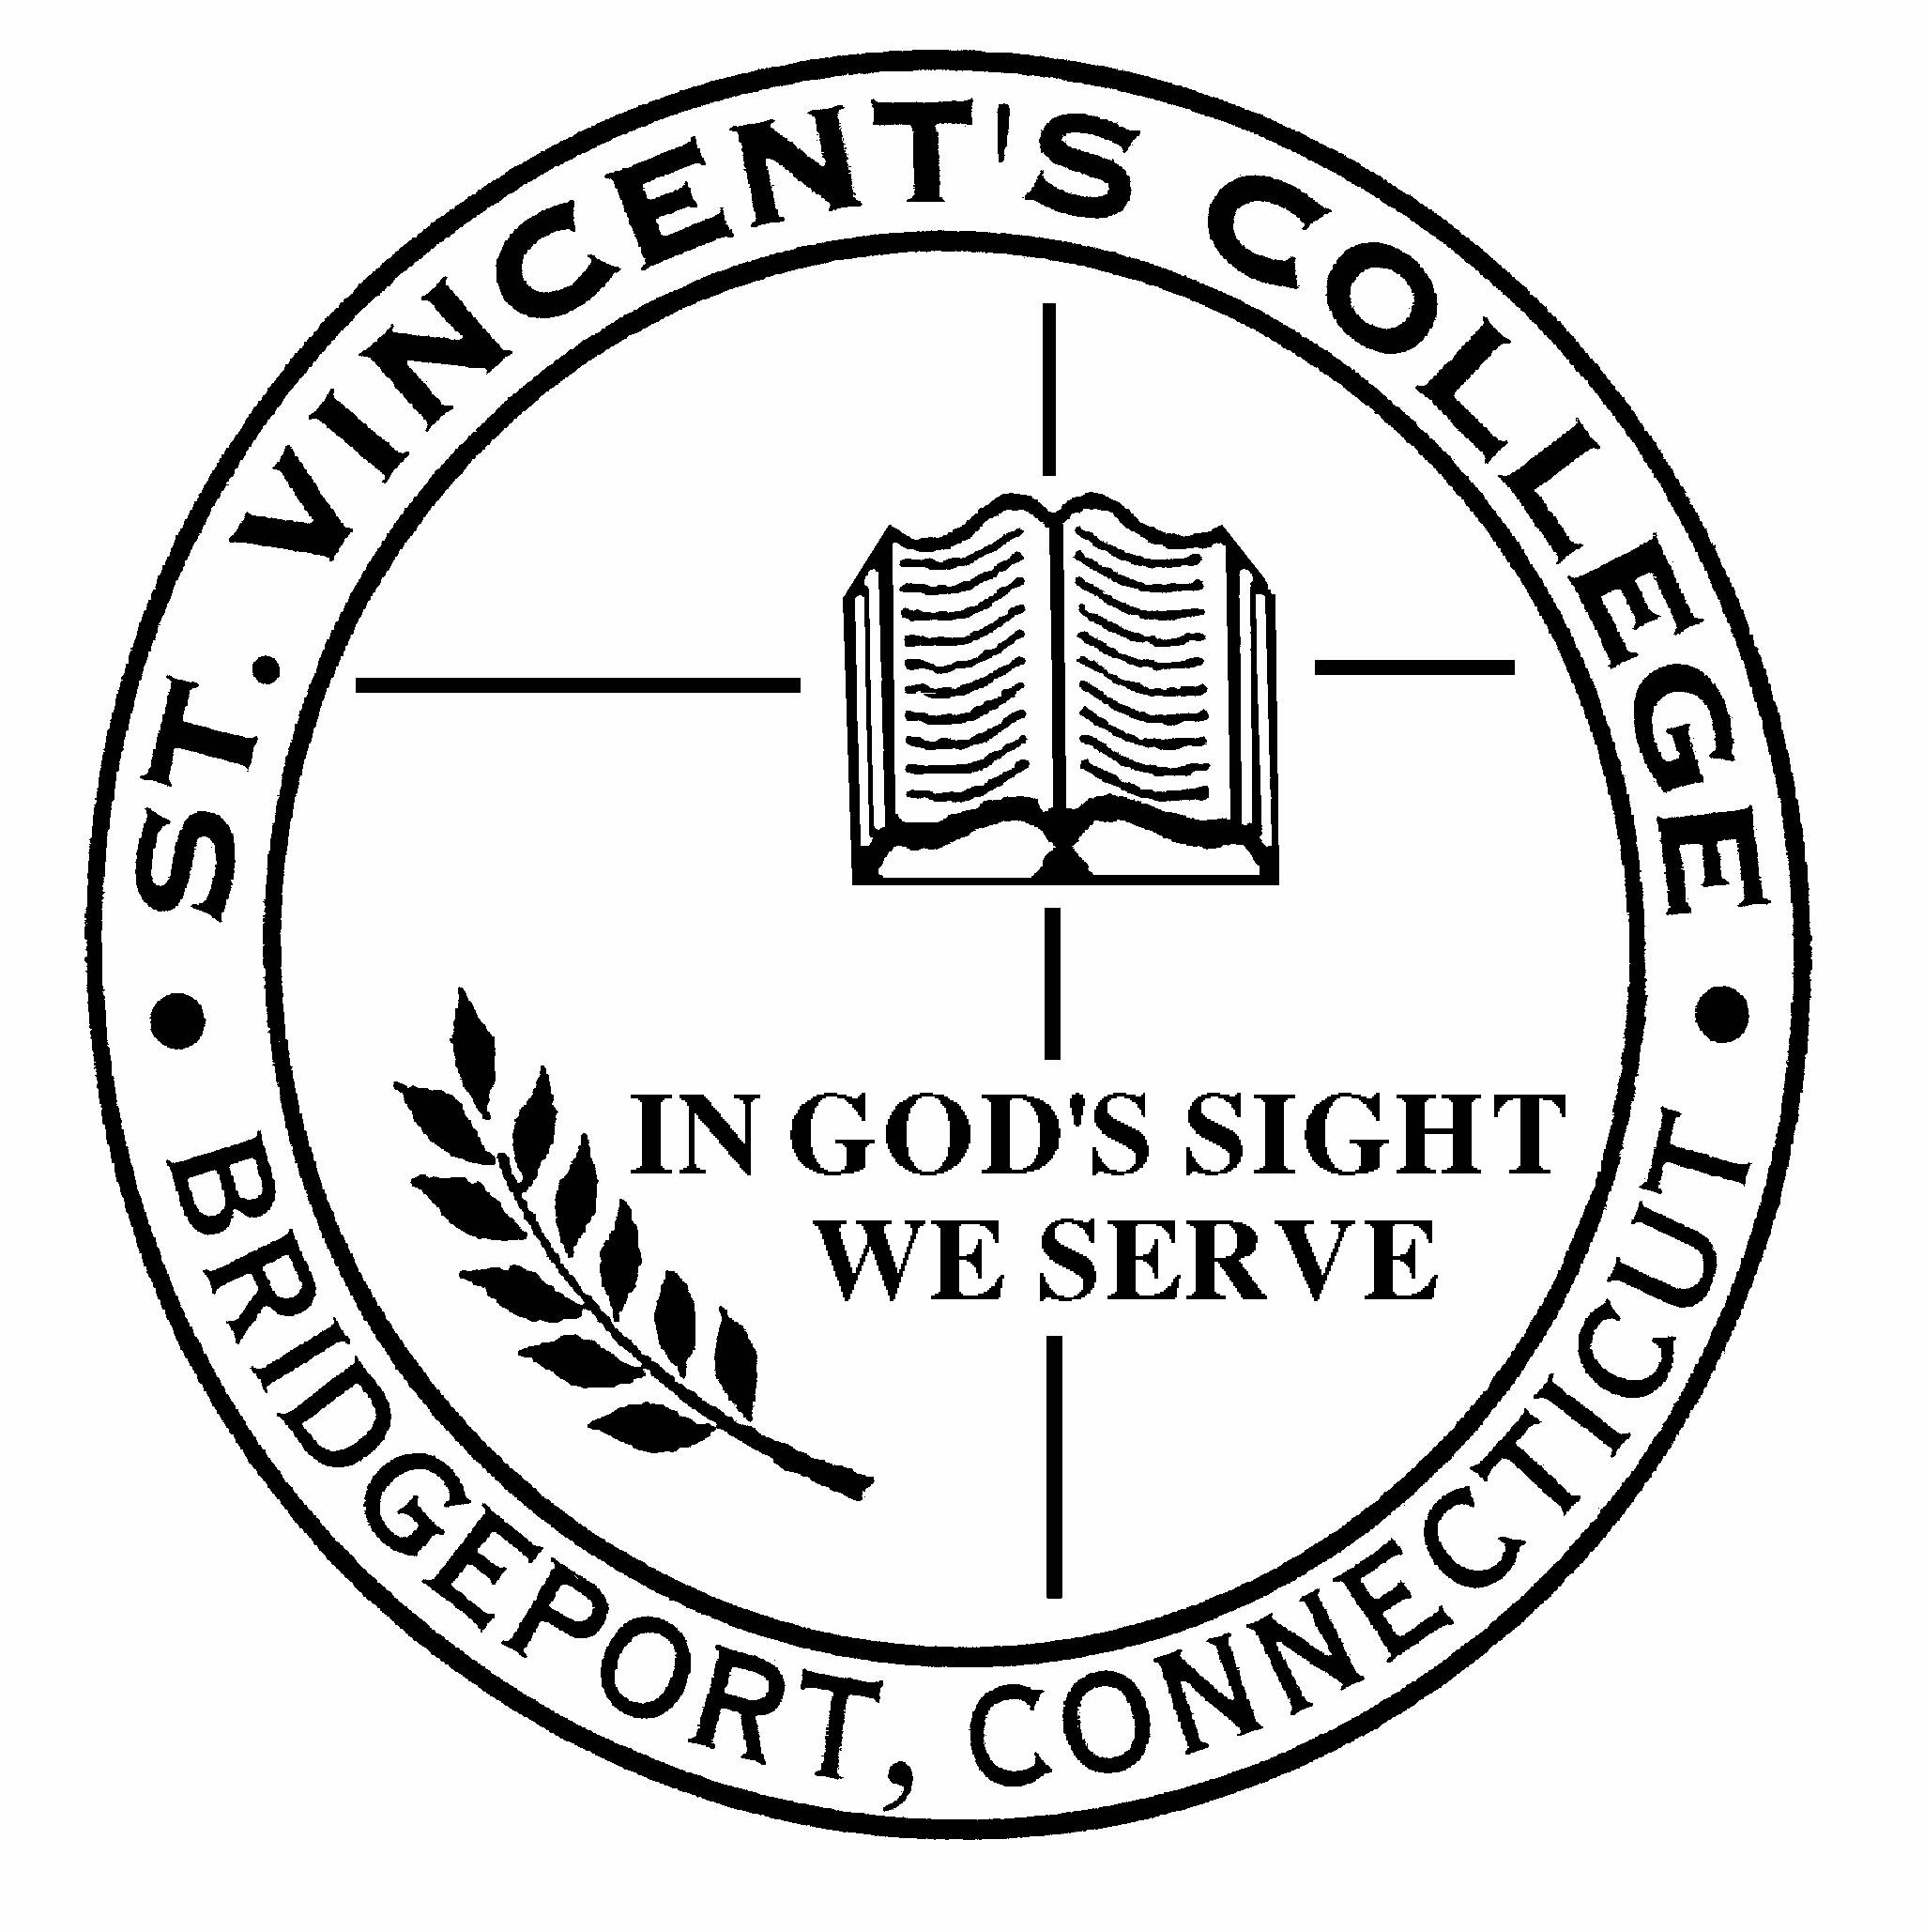 St. Vincent College